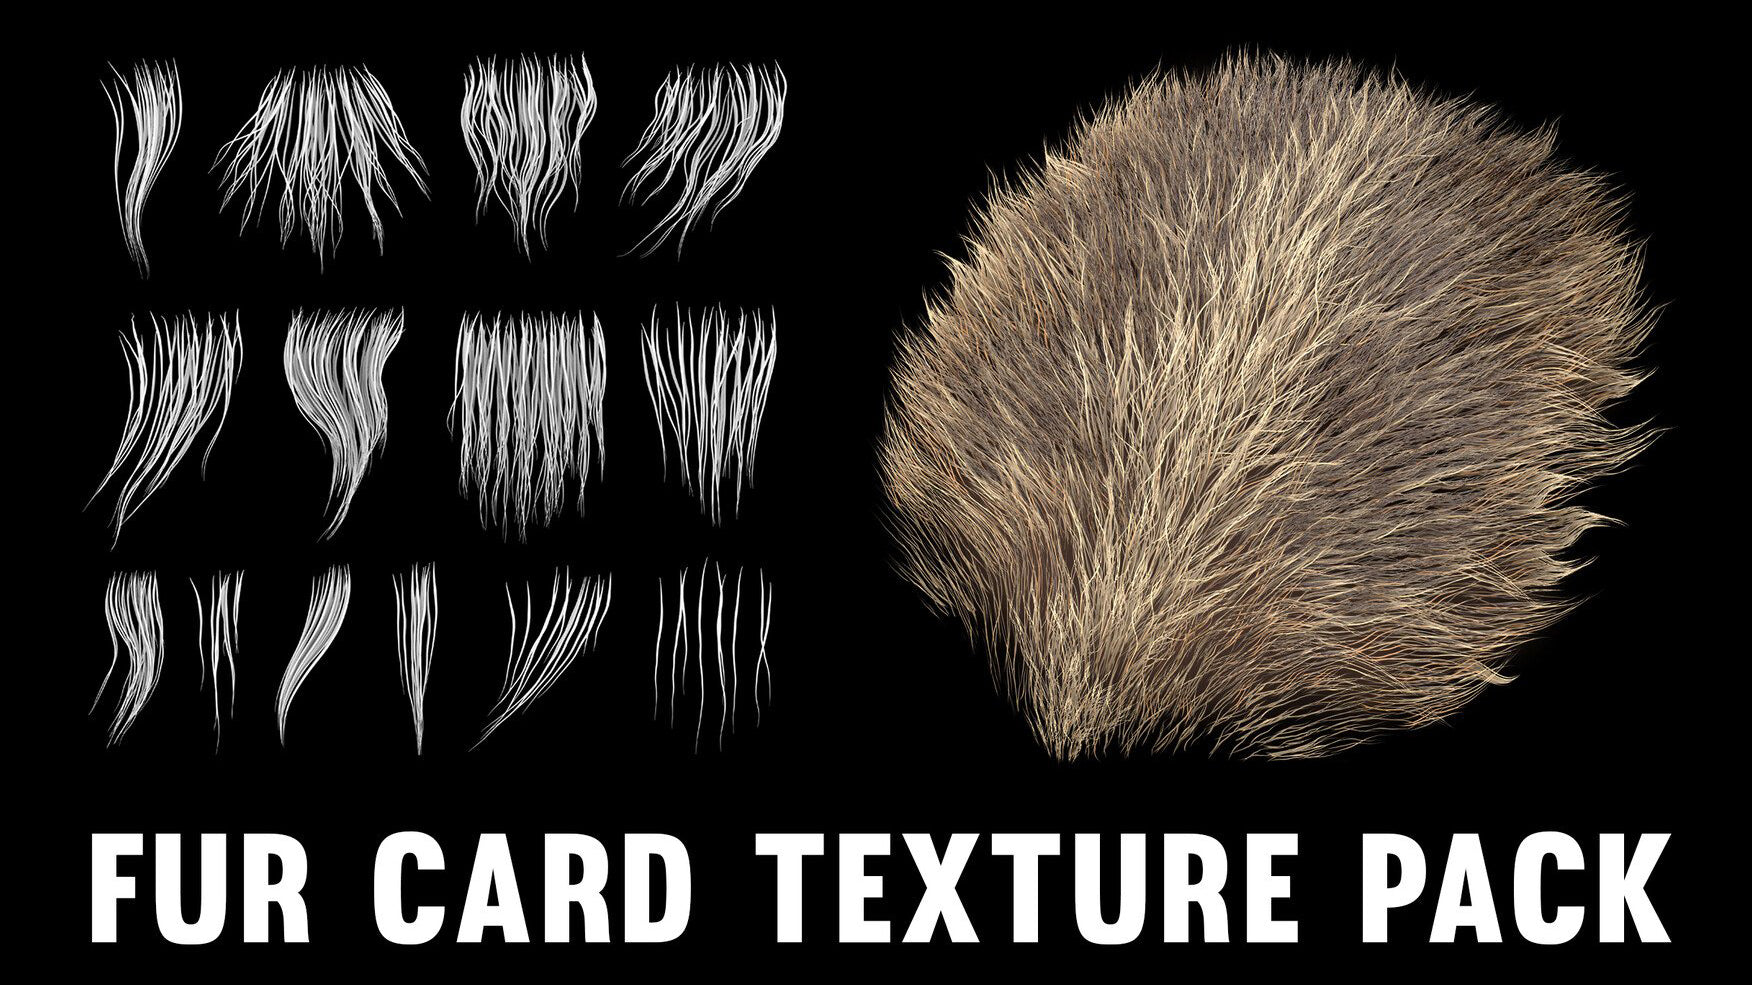 Fur Card Texture Pack + IMM